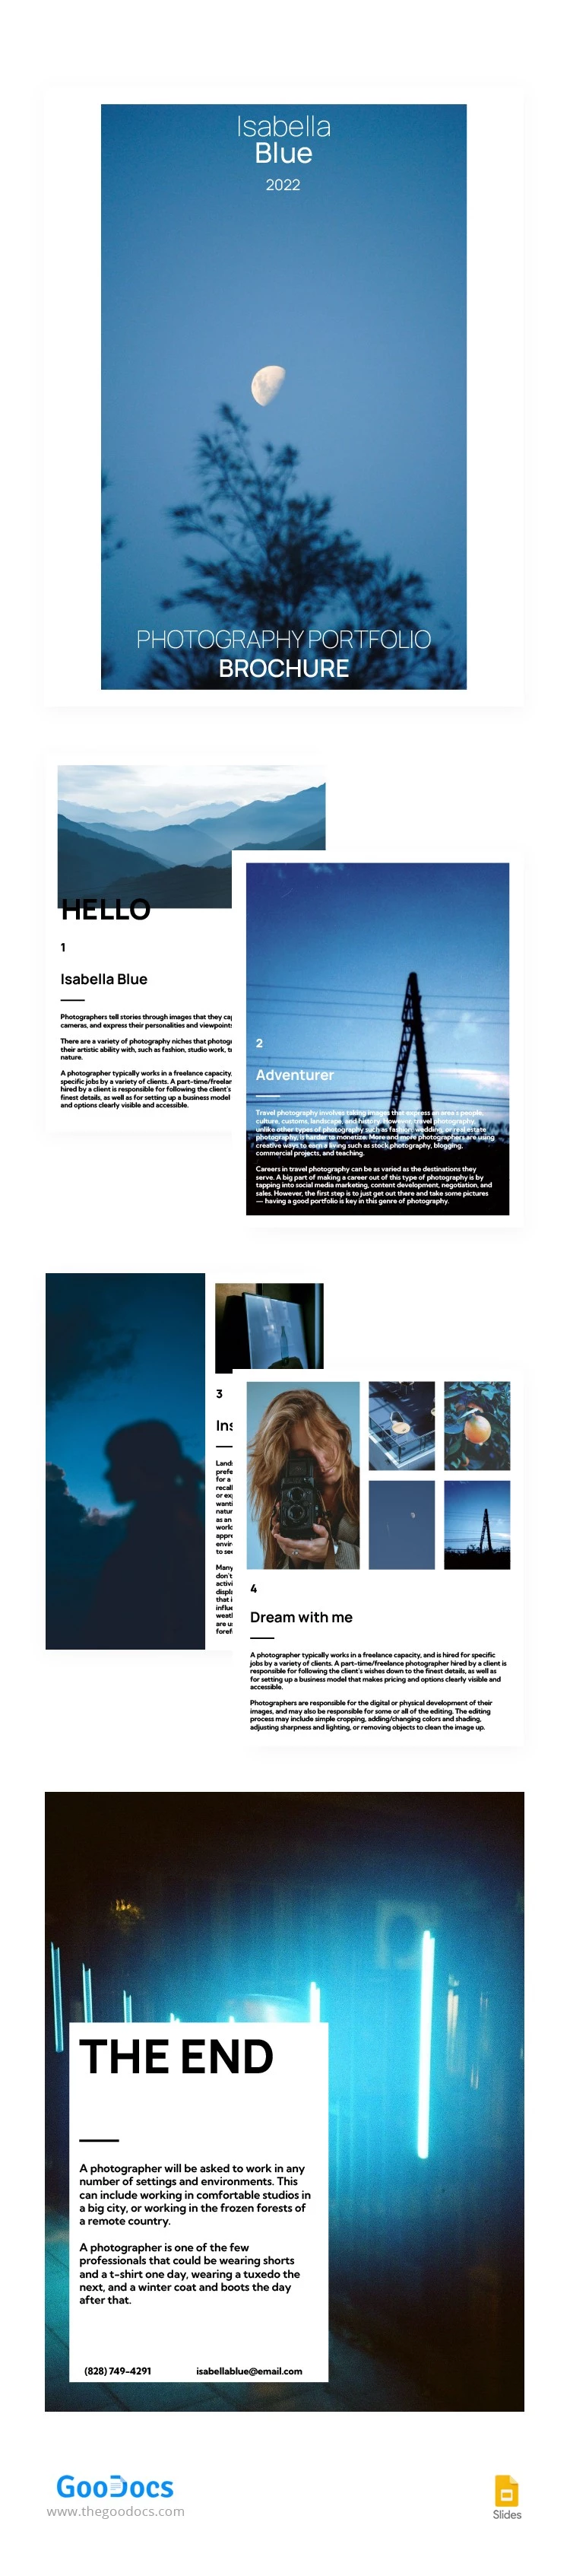 Portfolio de photographie Brochure - free Google Docs Template - 10064103